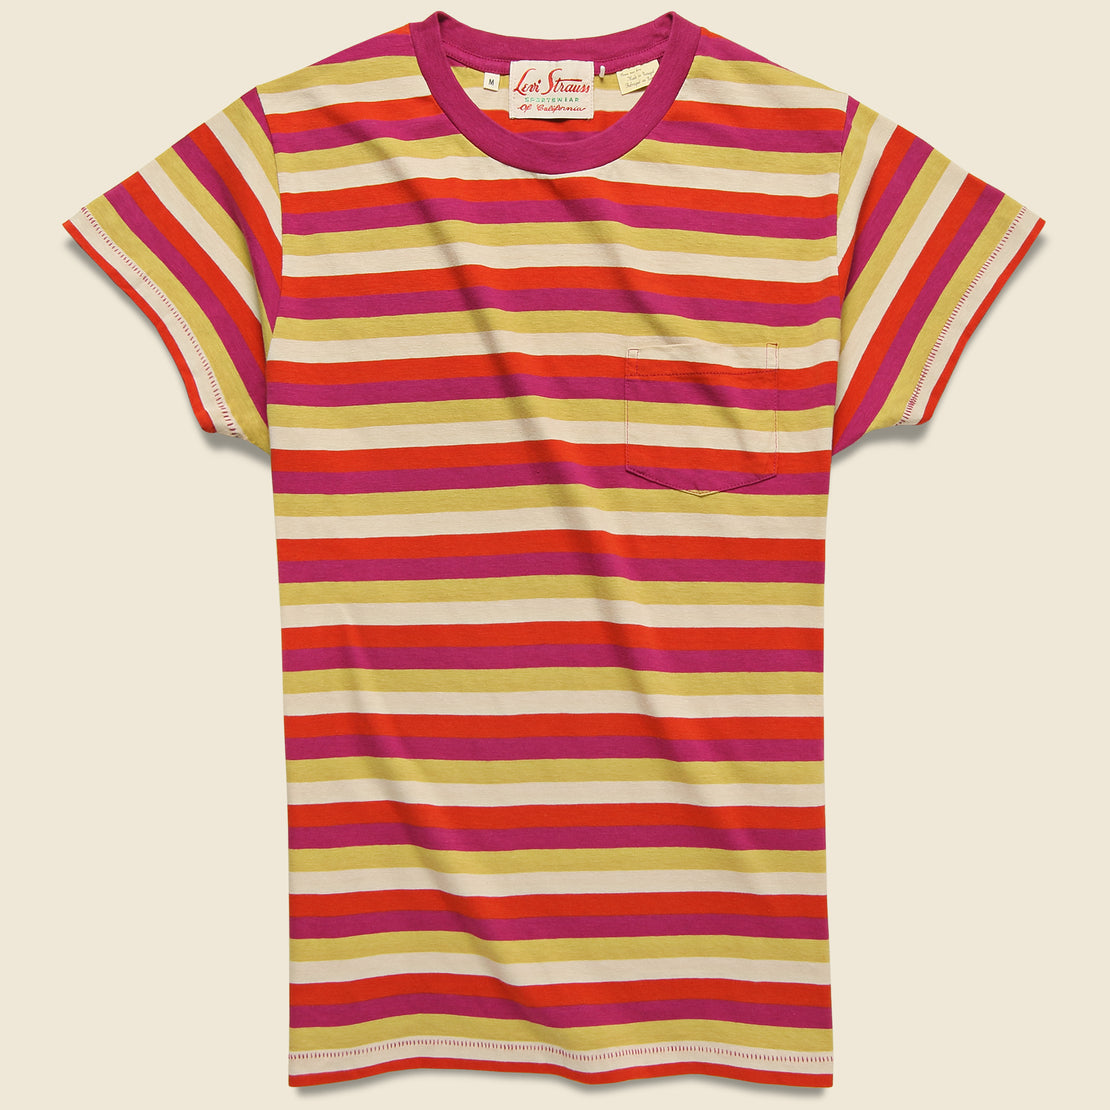 Levis Vintage Clothing 1950s Sportswear Tee - Red Stripe